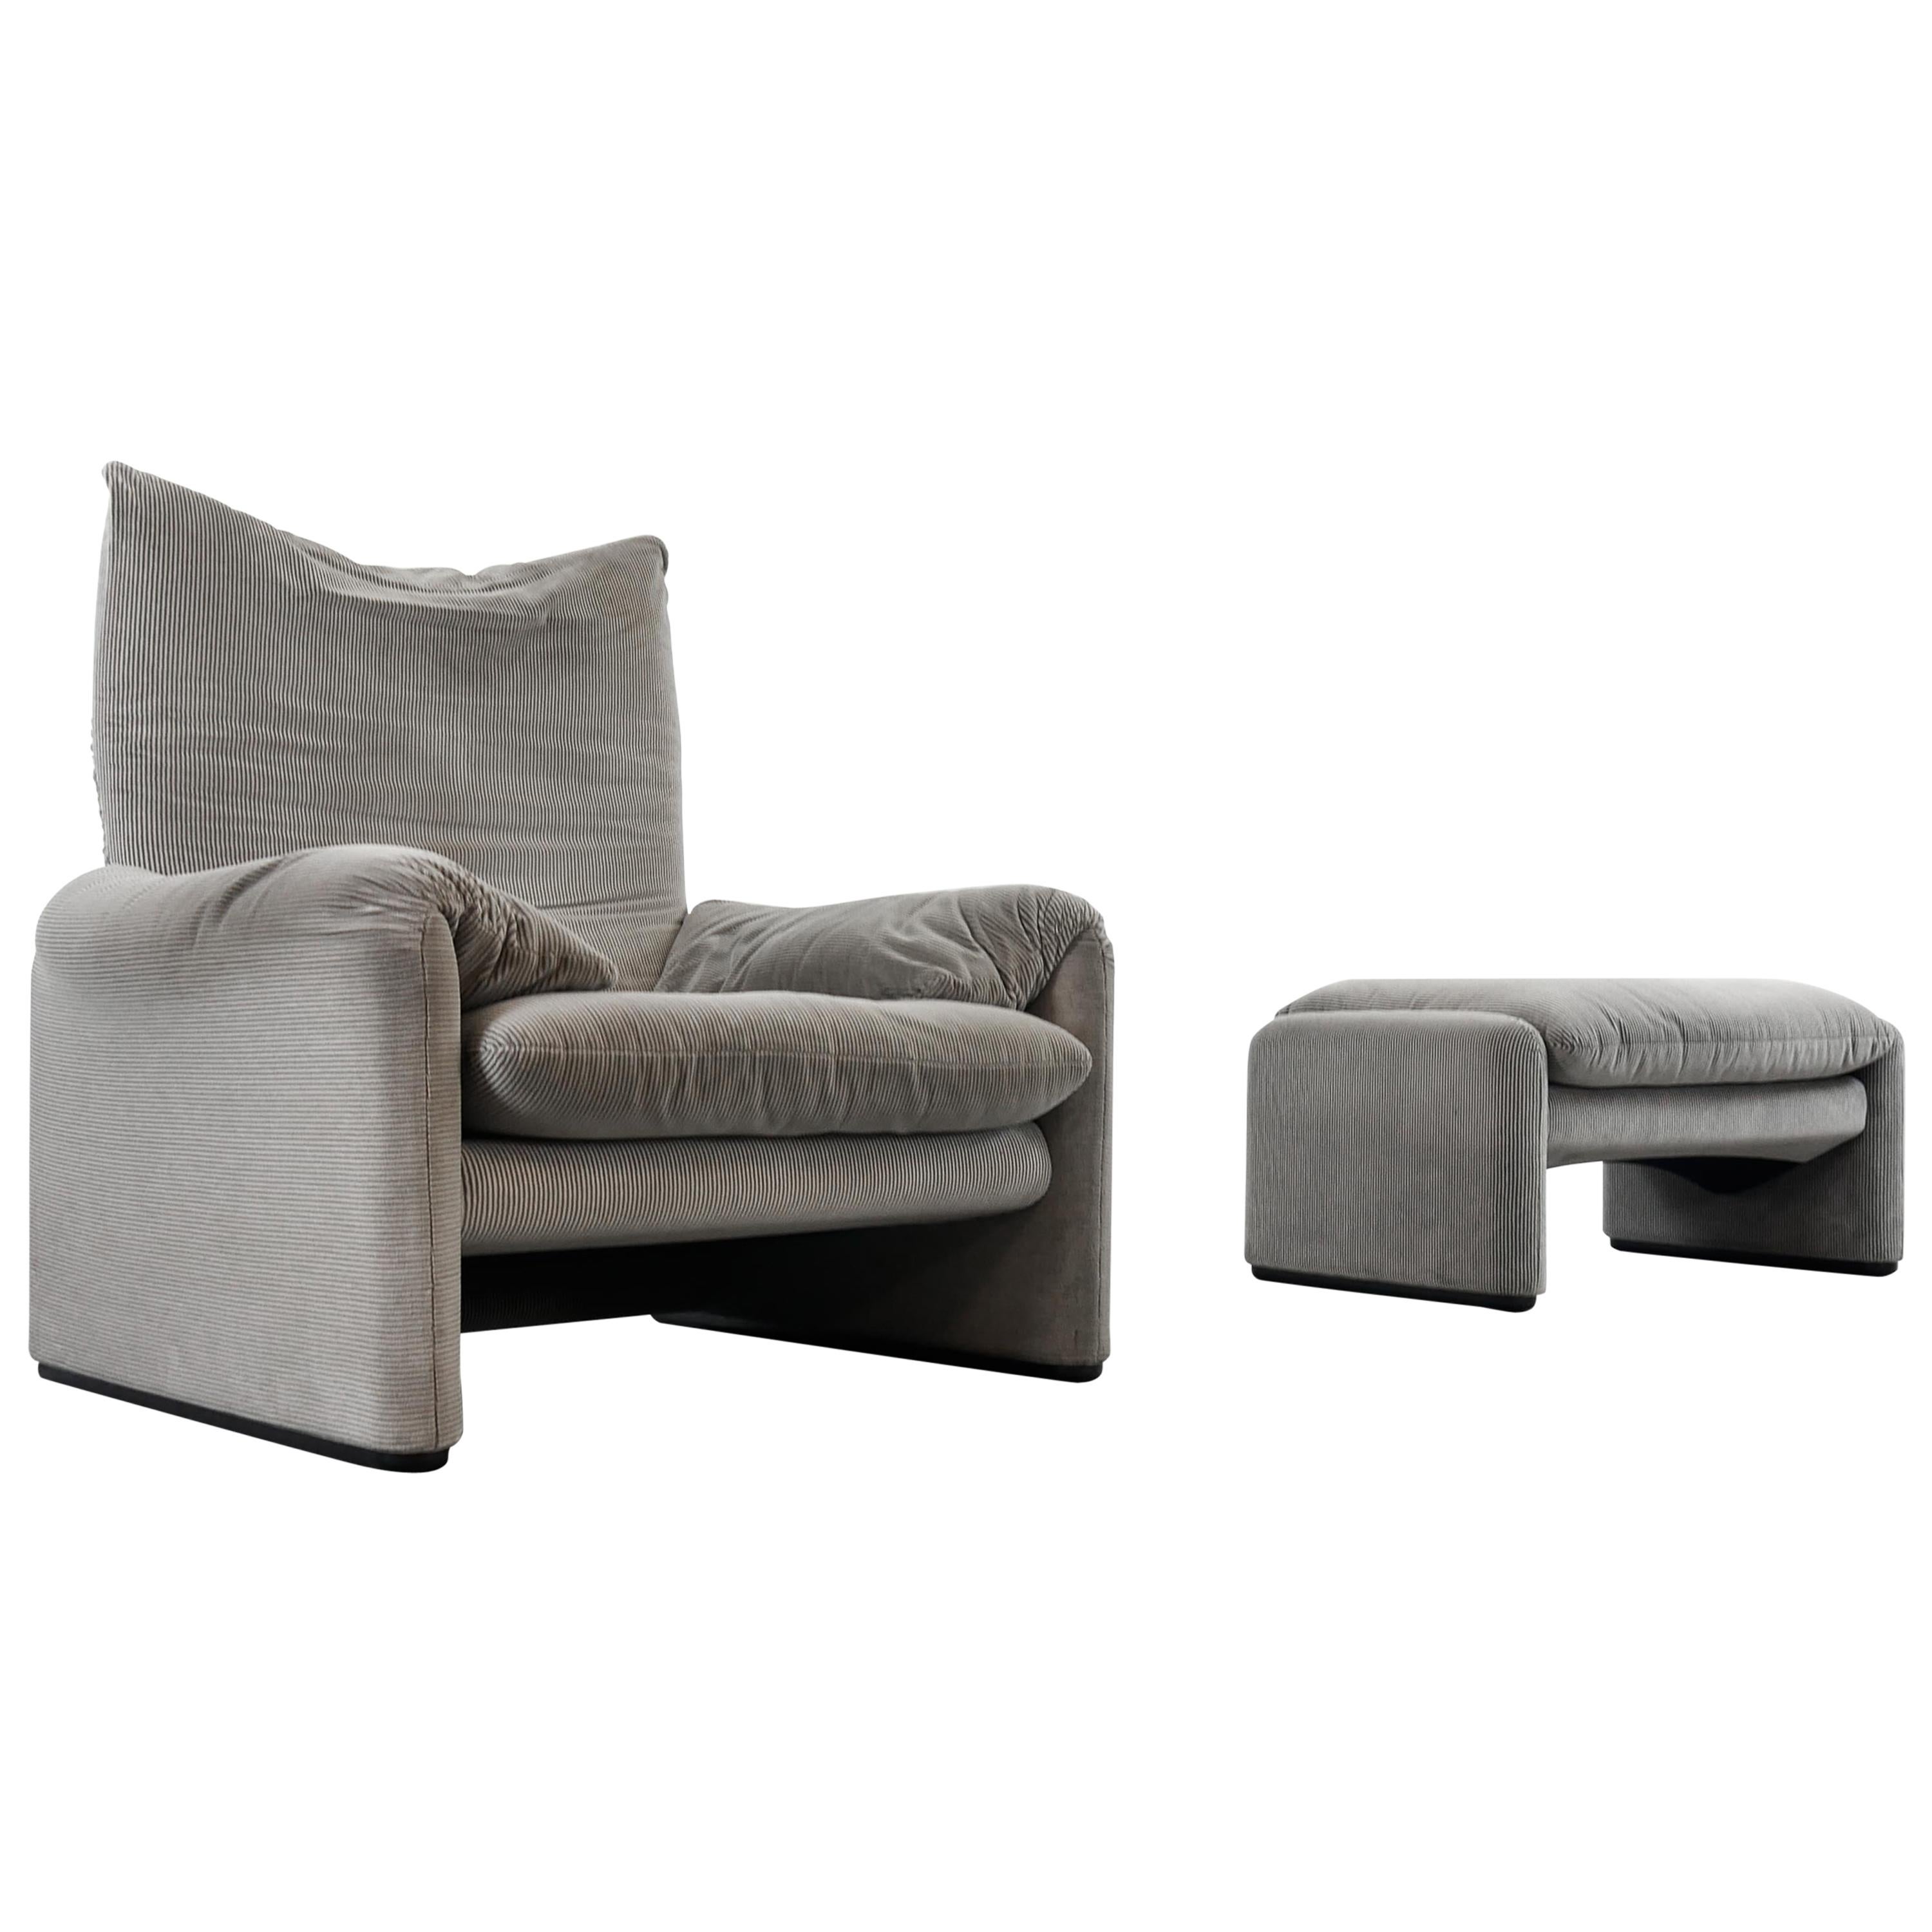 Cassina Maralunga Chair and Ottoman /Stool in Grey Striped Fabrics